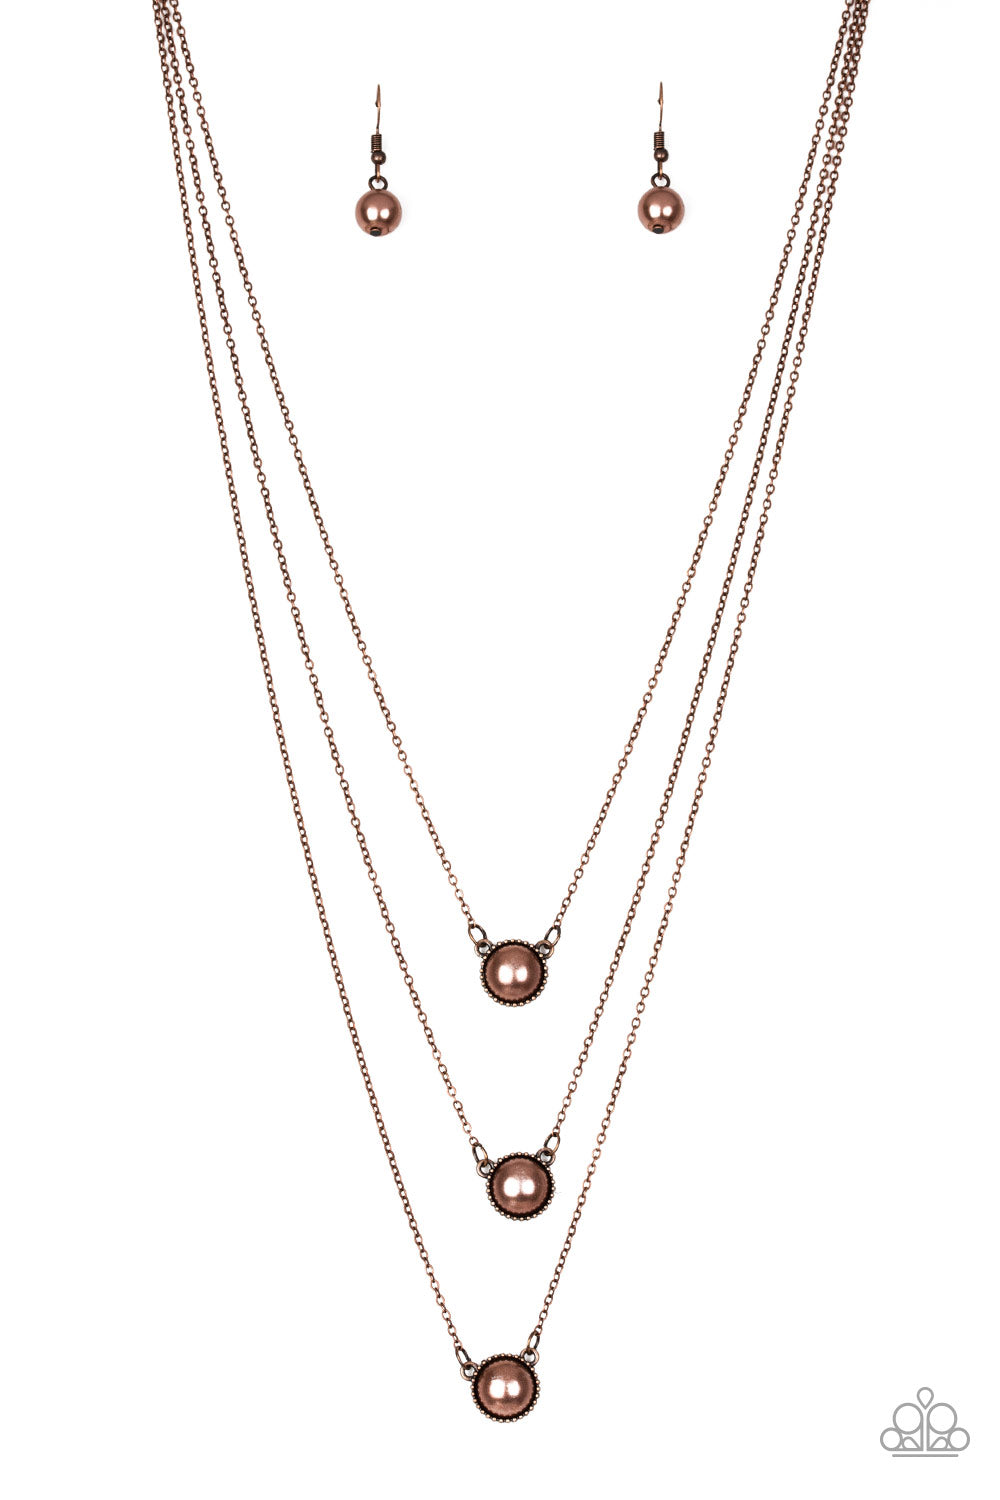 A Love For Luster - Copper Necklace Set - Princess Glam Shop